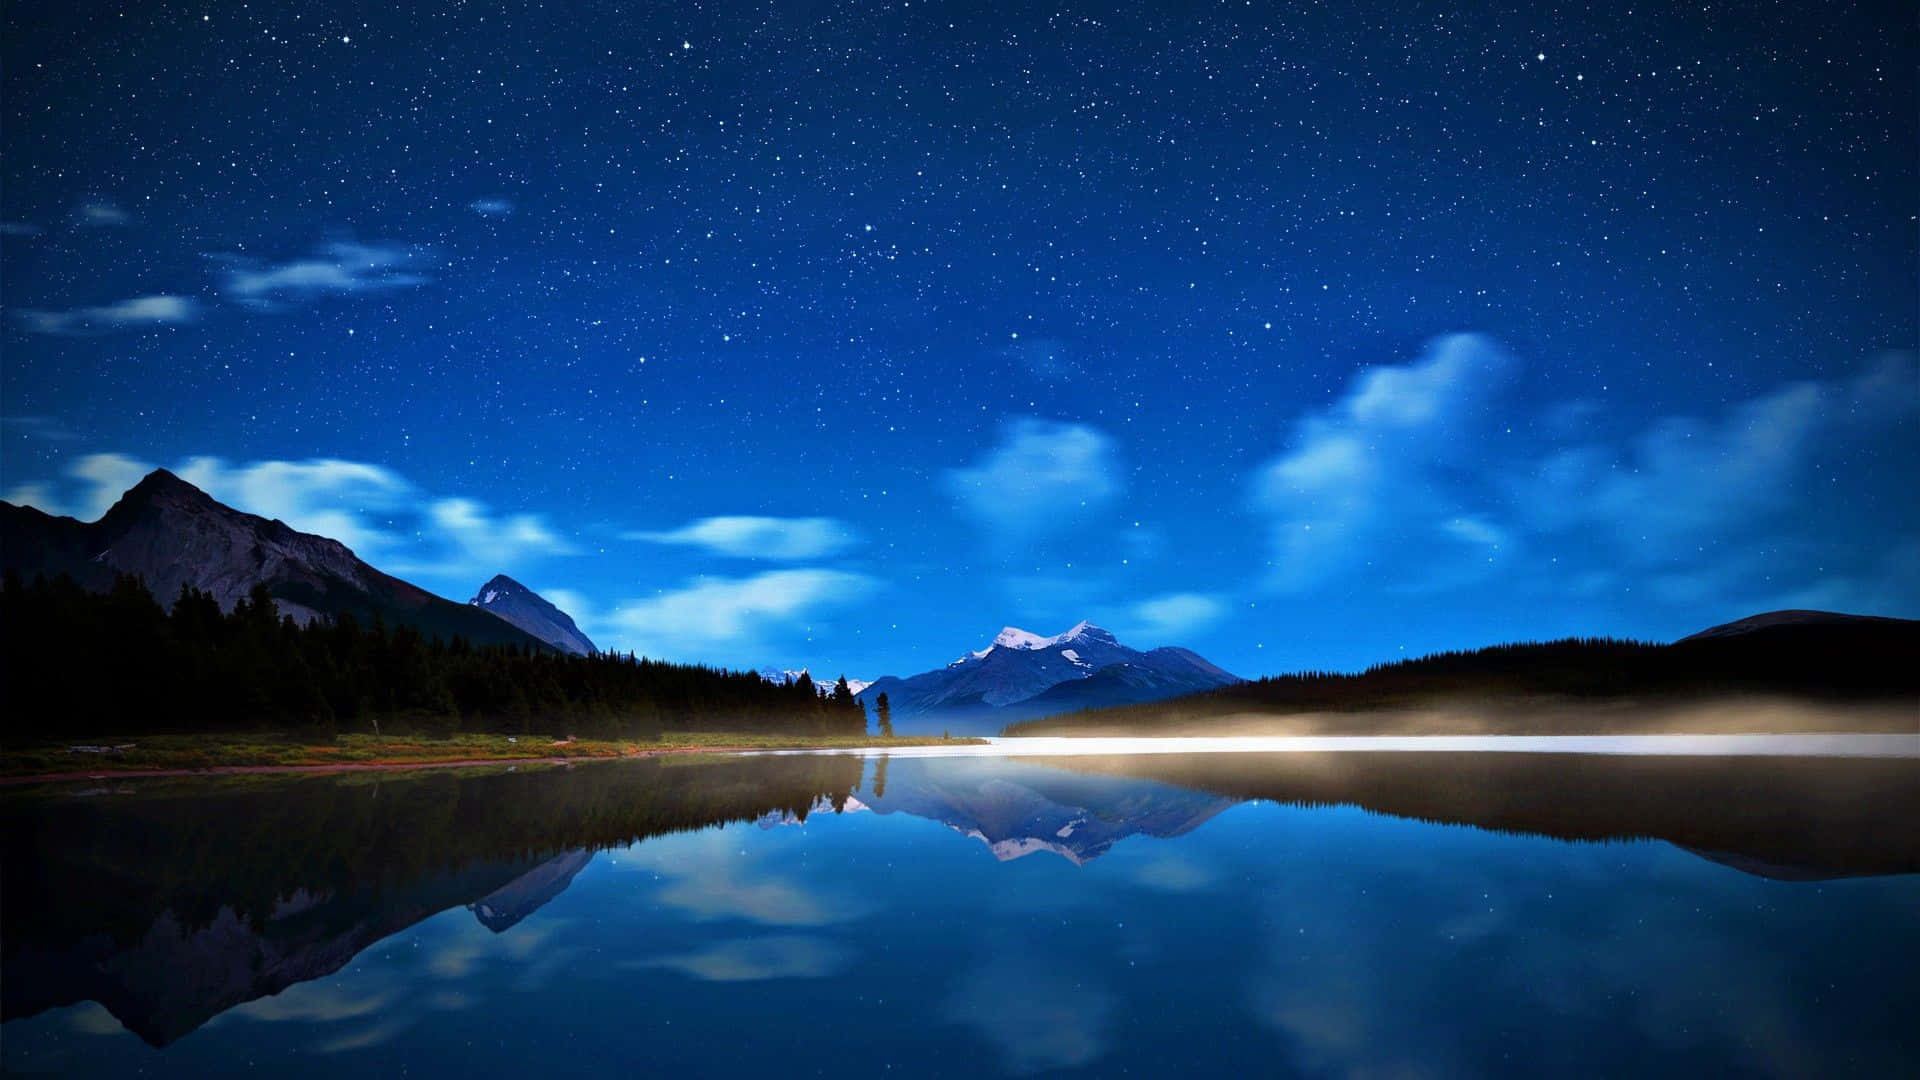 “A beautiful night lit up by vibrant stars" Wallpaper